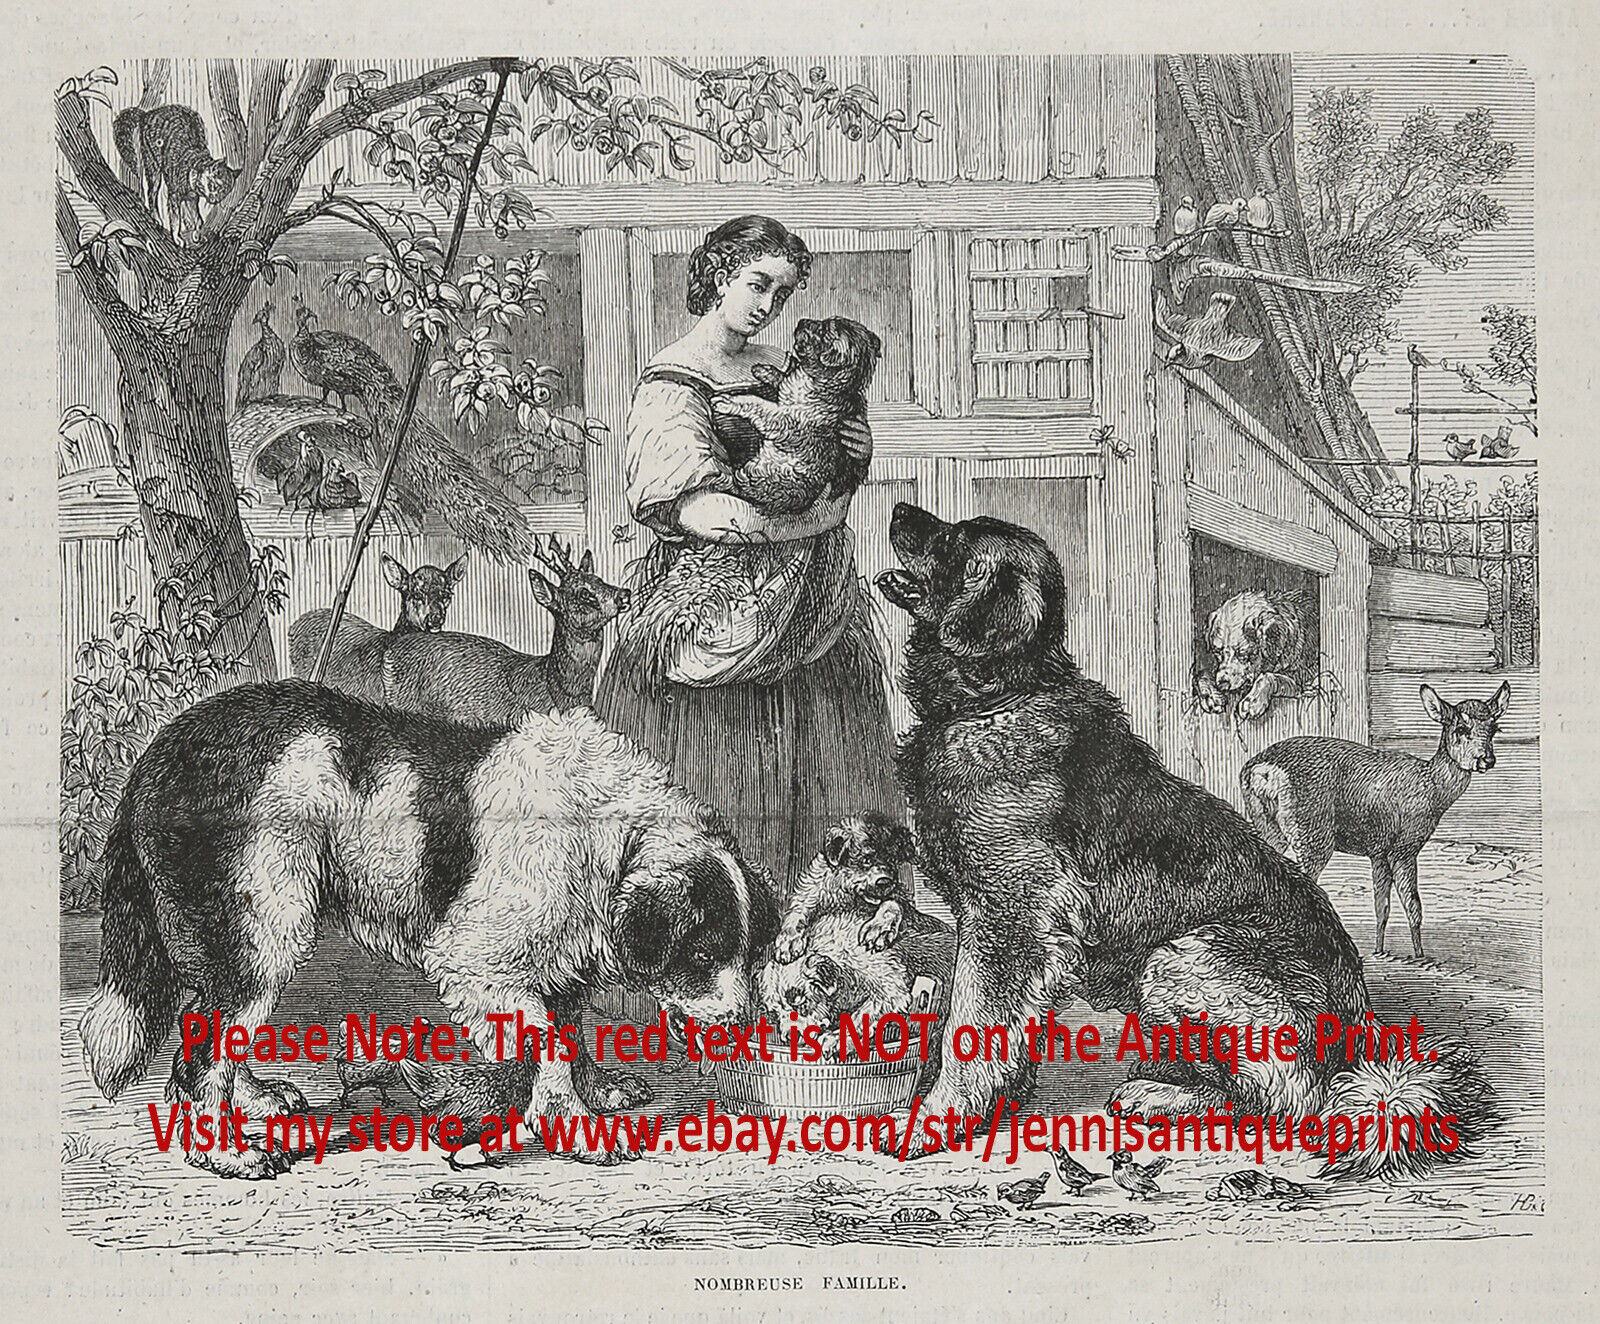 Dog Newfoundland Family, Landseer & Brown, Puppies & Deer, 1880s Antique Print